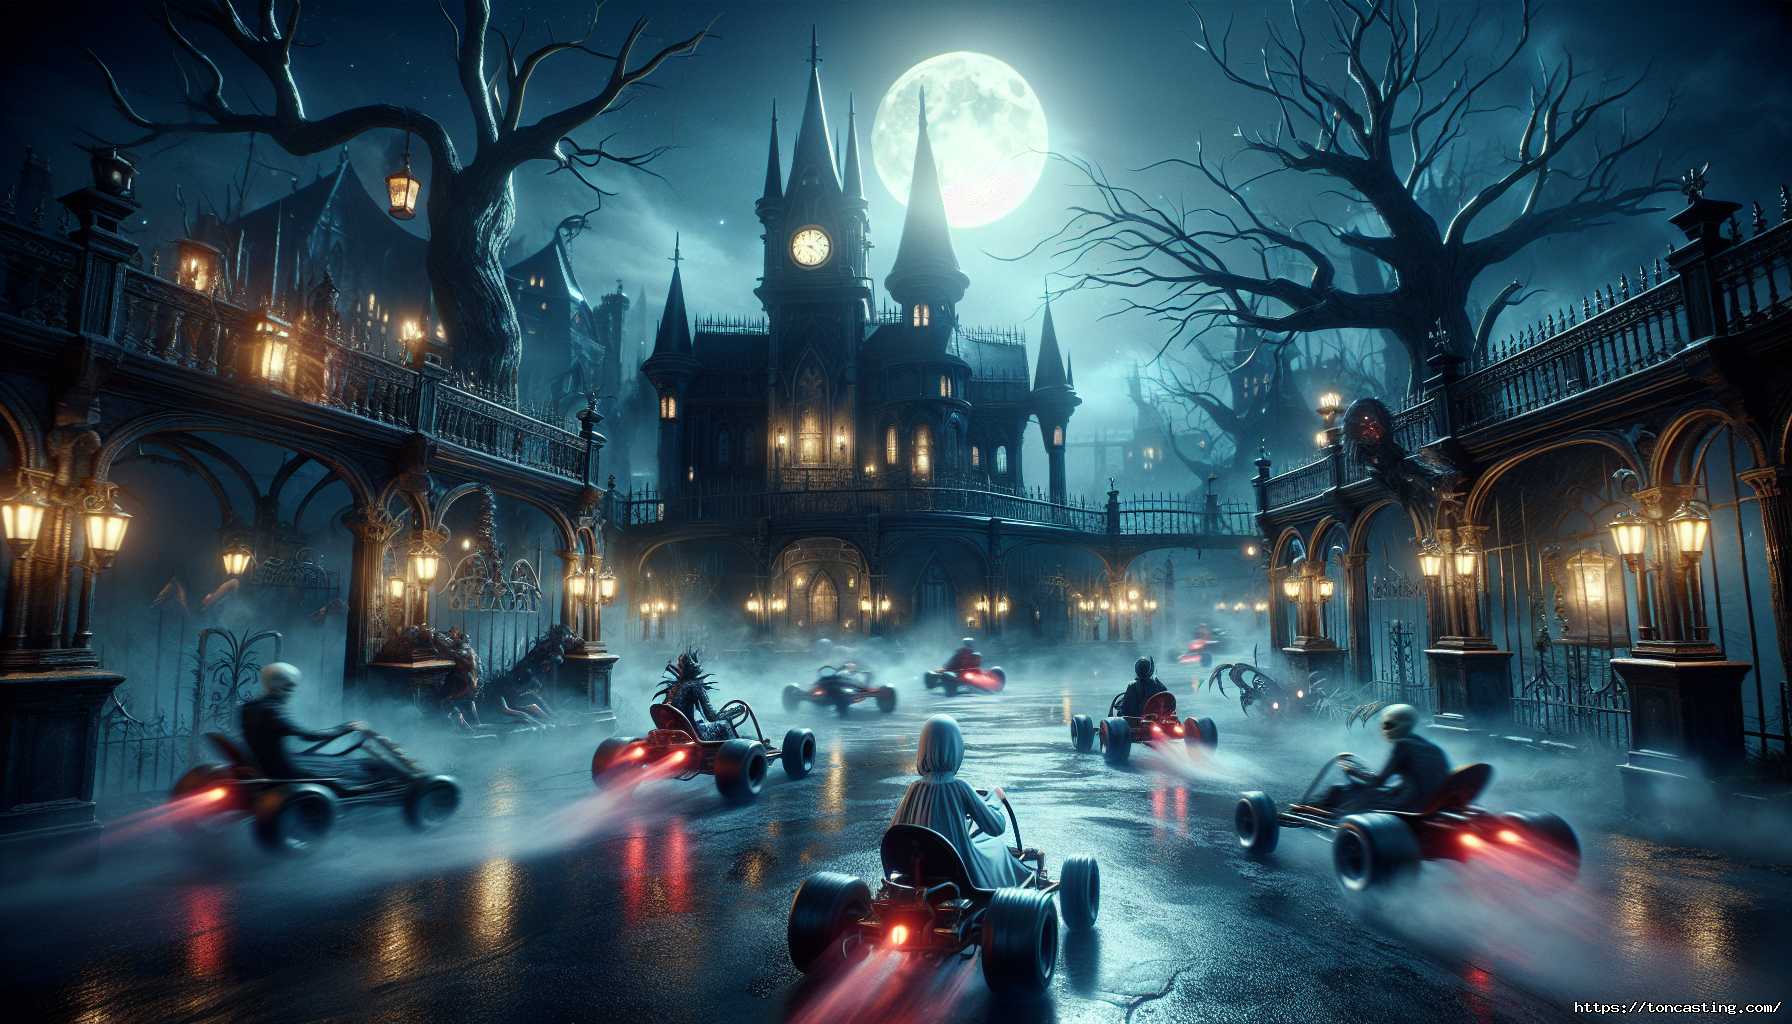 Nightmare Kart : Le Demake de Bloodborne qui Transcende les Courses de Karts